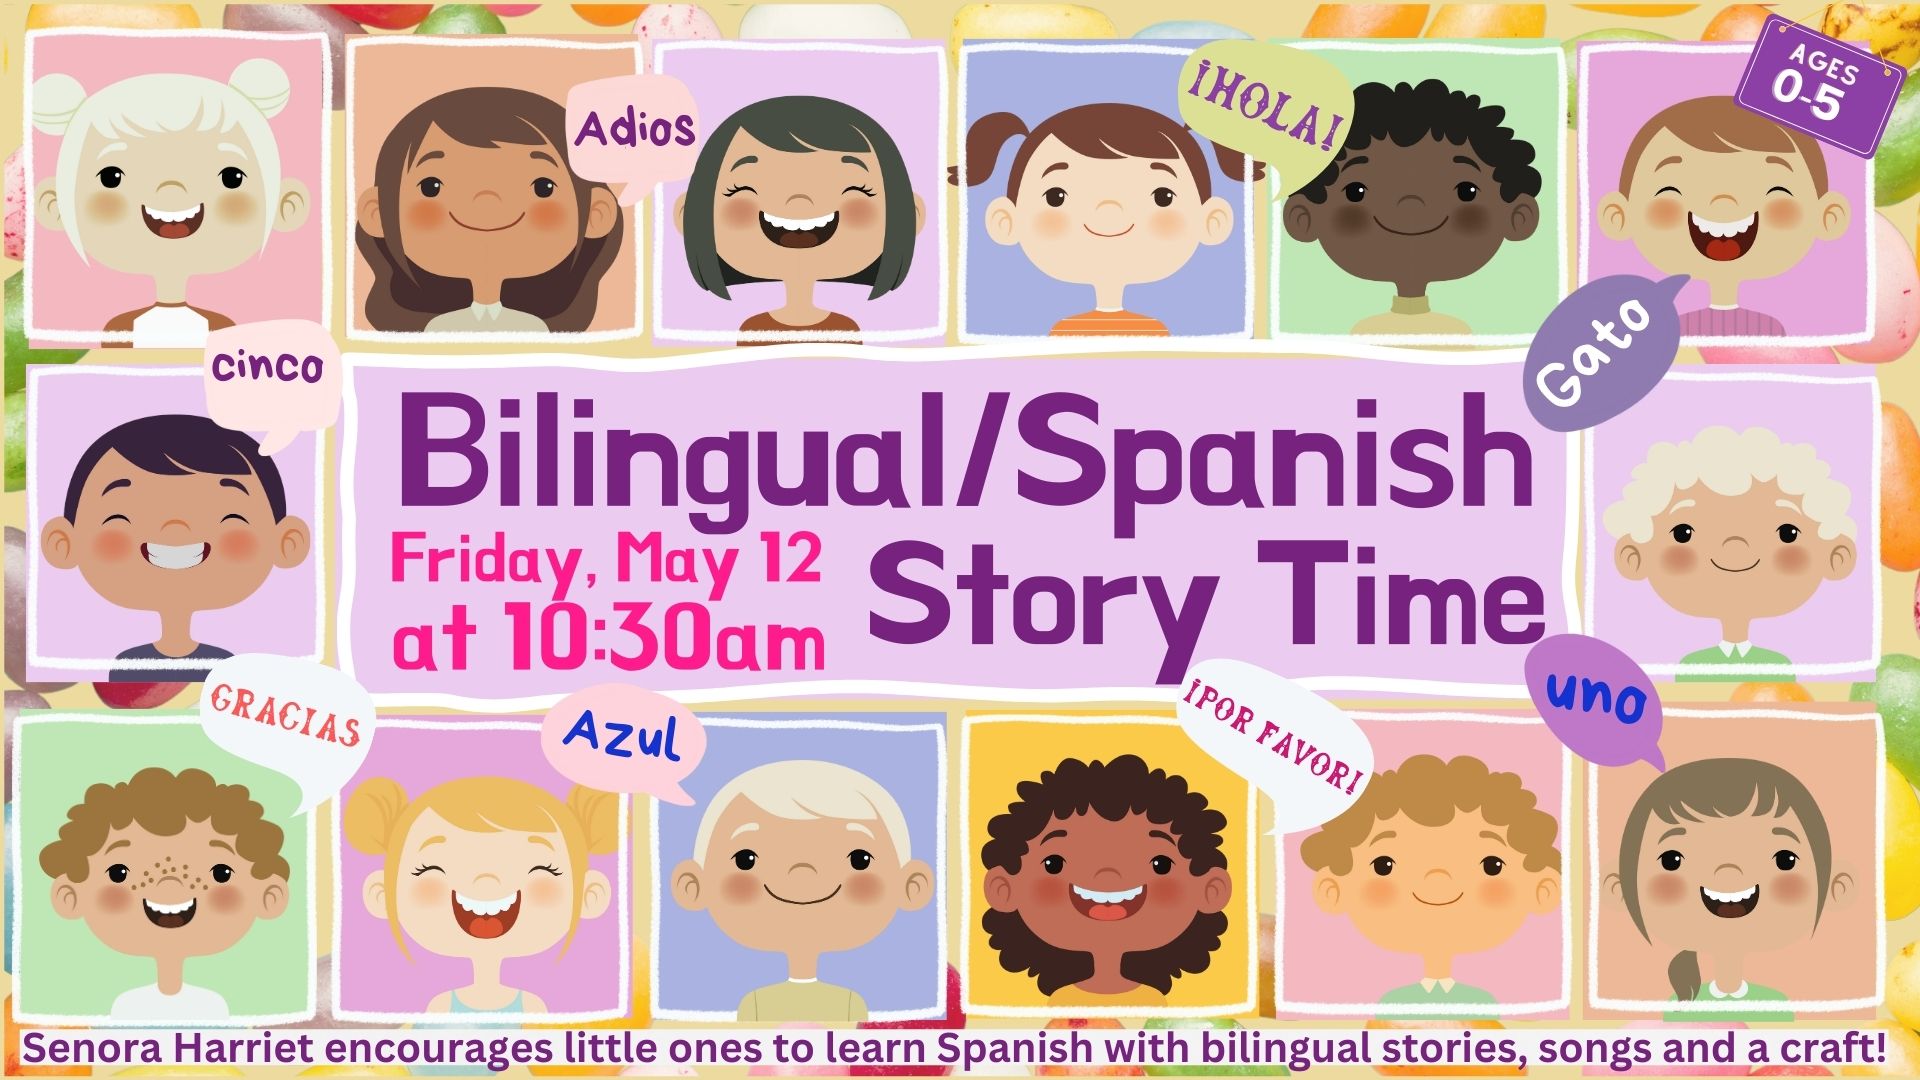 Bilingual/Spanish Story Time